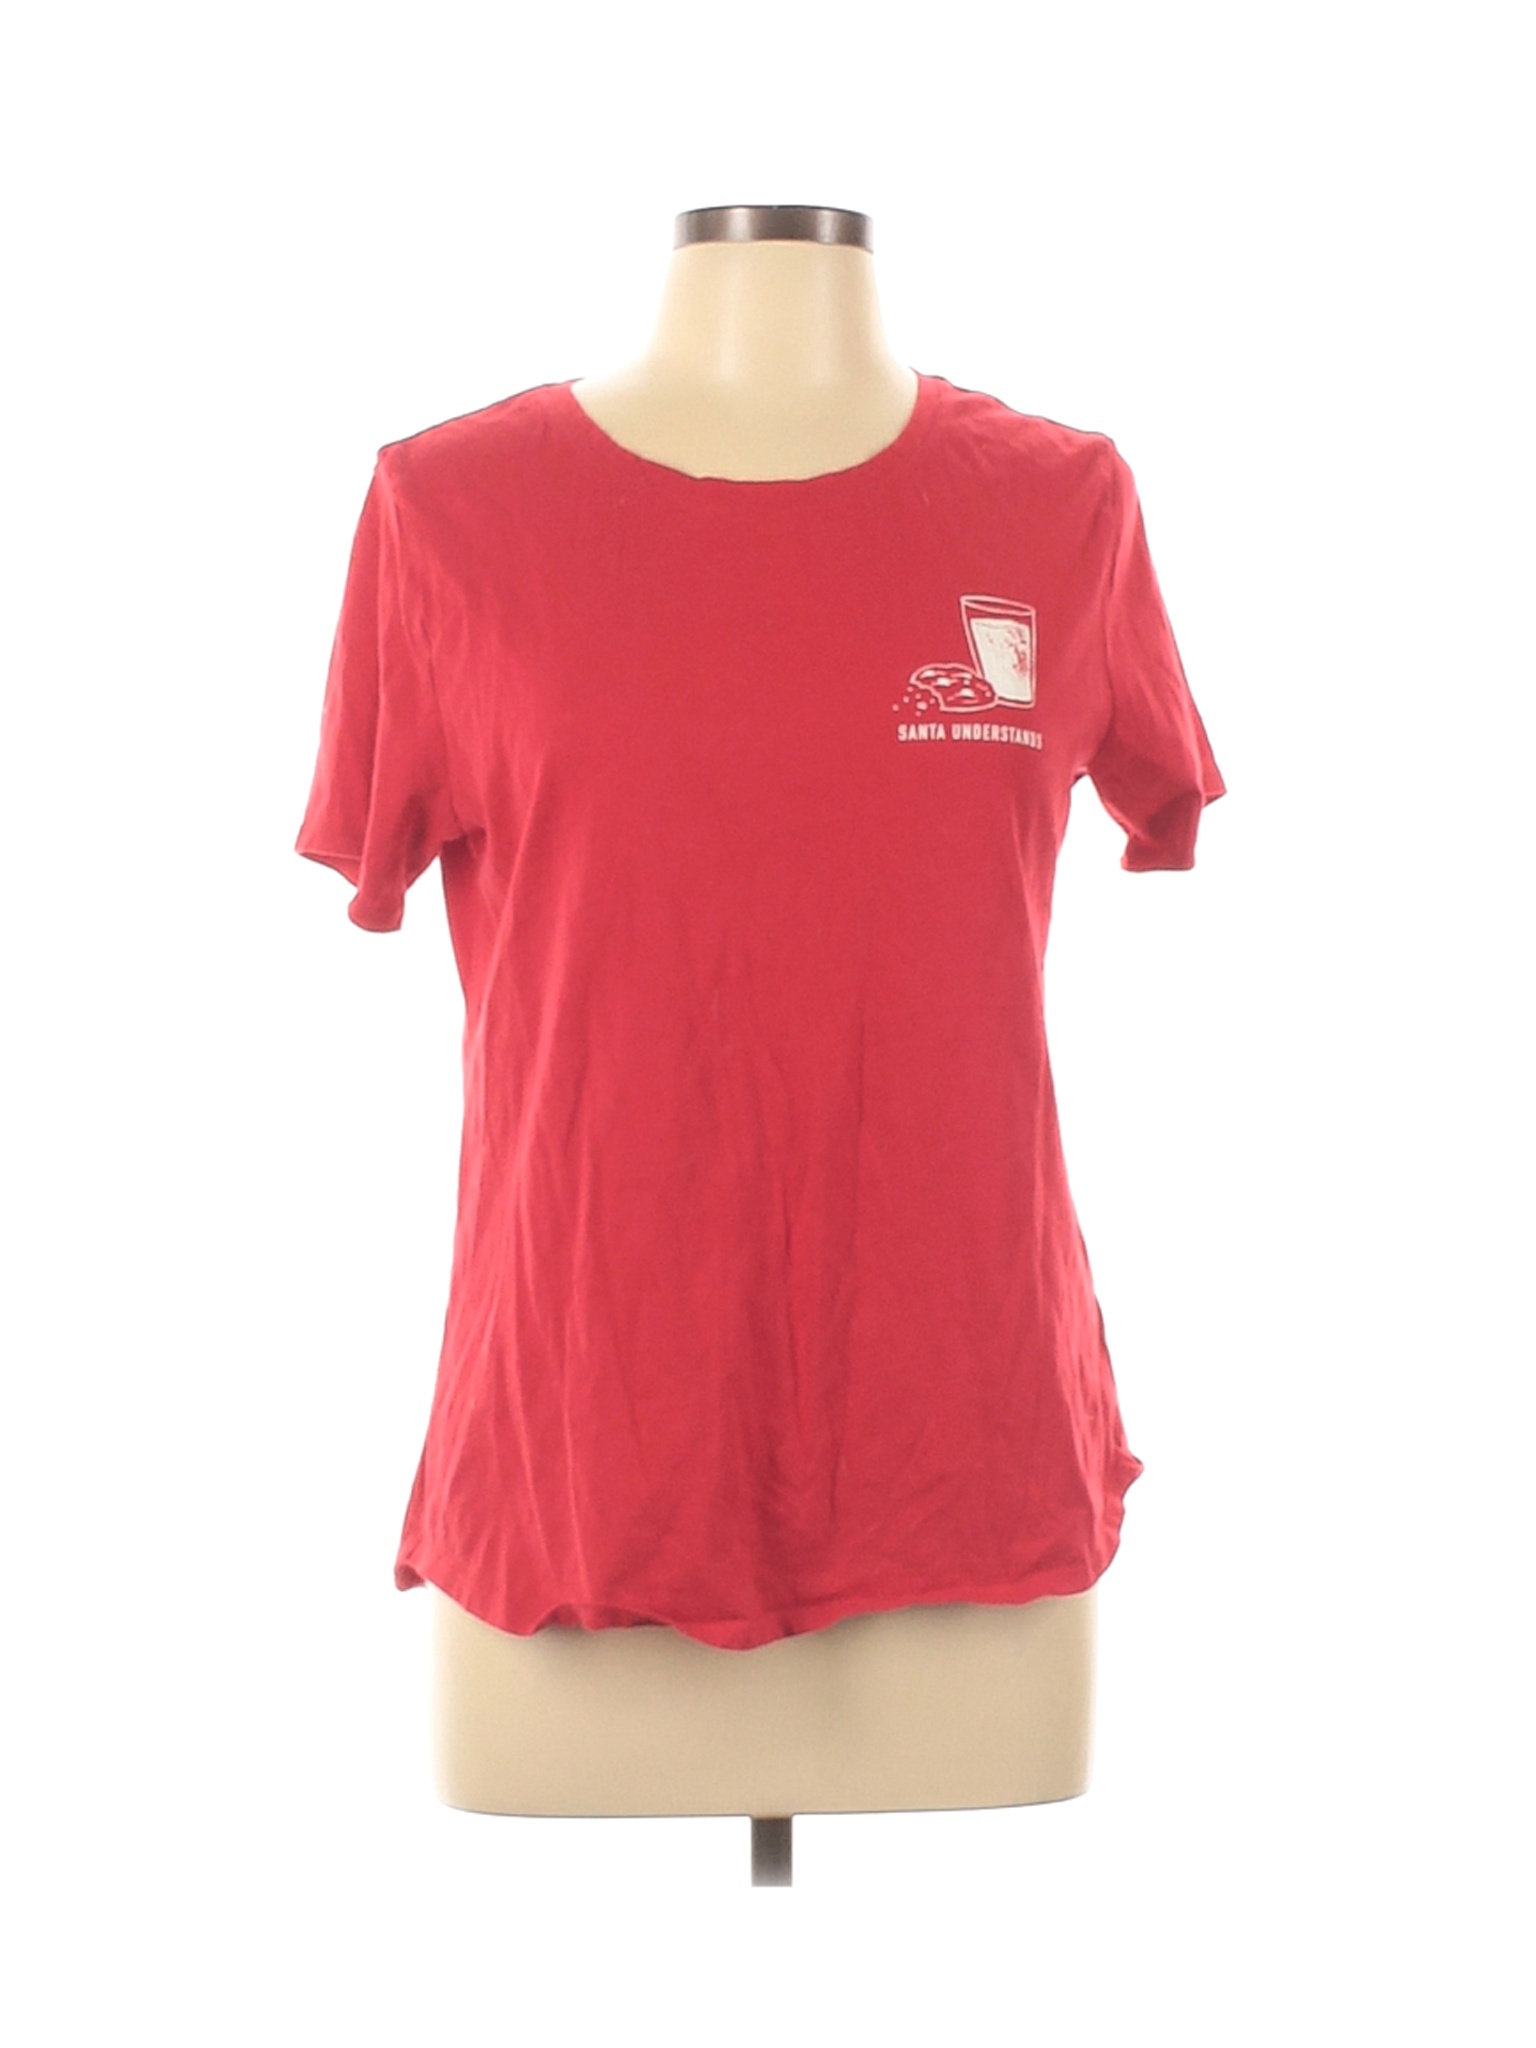 Old Navy Women Red Short Sleeve T-Shirt L | eBay